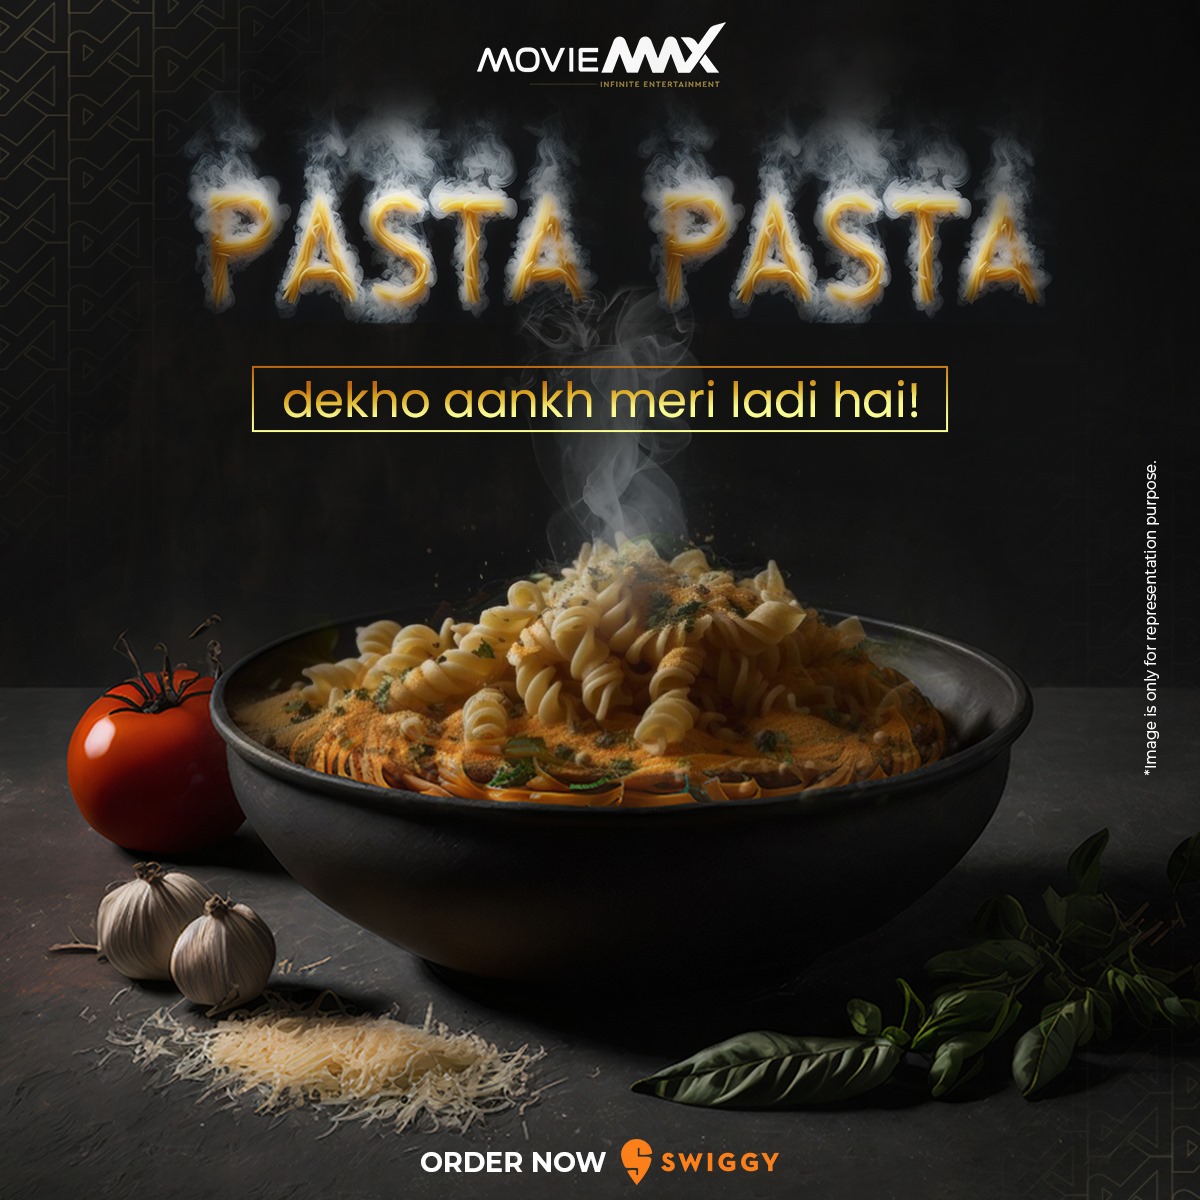 Indulge in MovieMax Pasta - A feast for the eyes and the taste buds! 🍝✨
Visit #MovieMax today or #SwiggyIt
.
.
.
#MovieMaxPasta #MovieMaxFood #ItalianStation #MovieMaxOfficial #FoodAndBeverages #ItalianPasta #RaftaRafta #FoodPorn #PastaLove #Swiggy